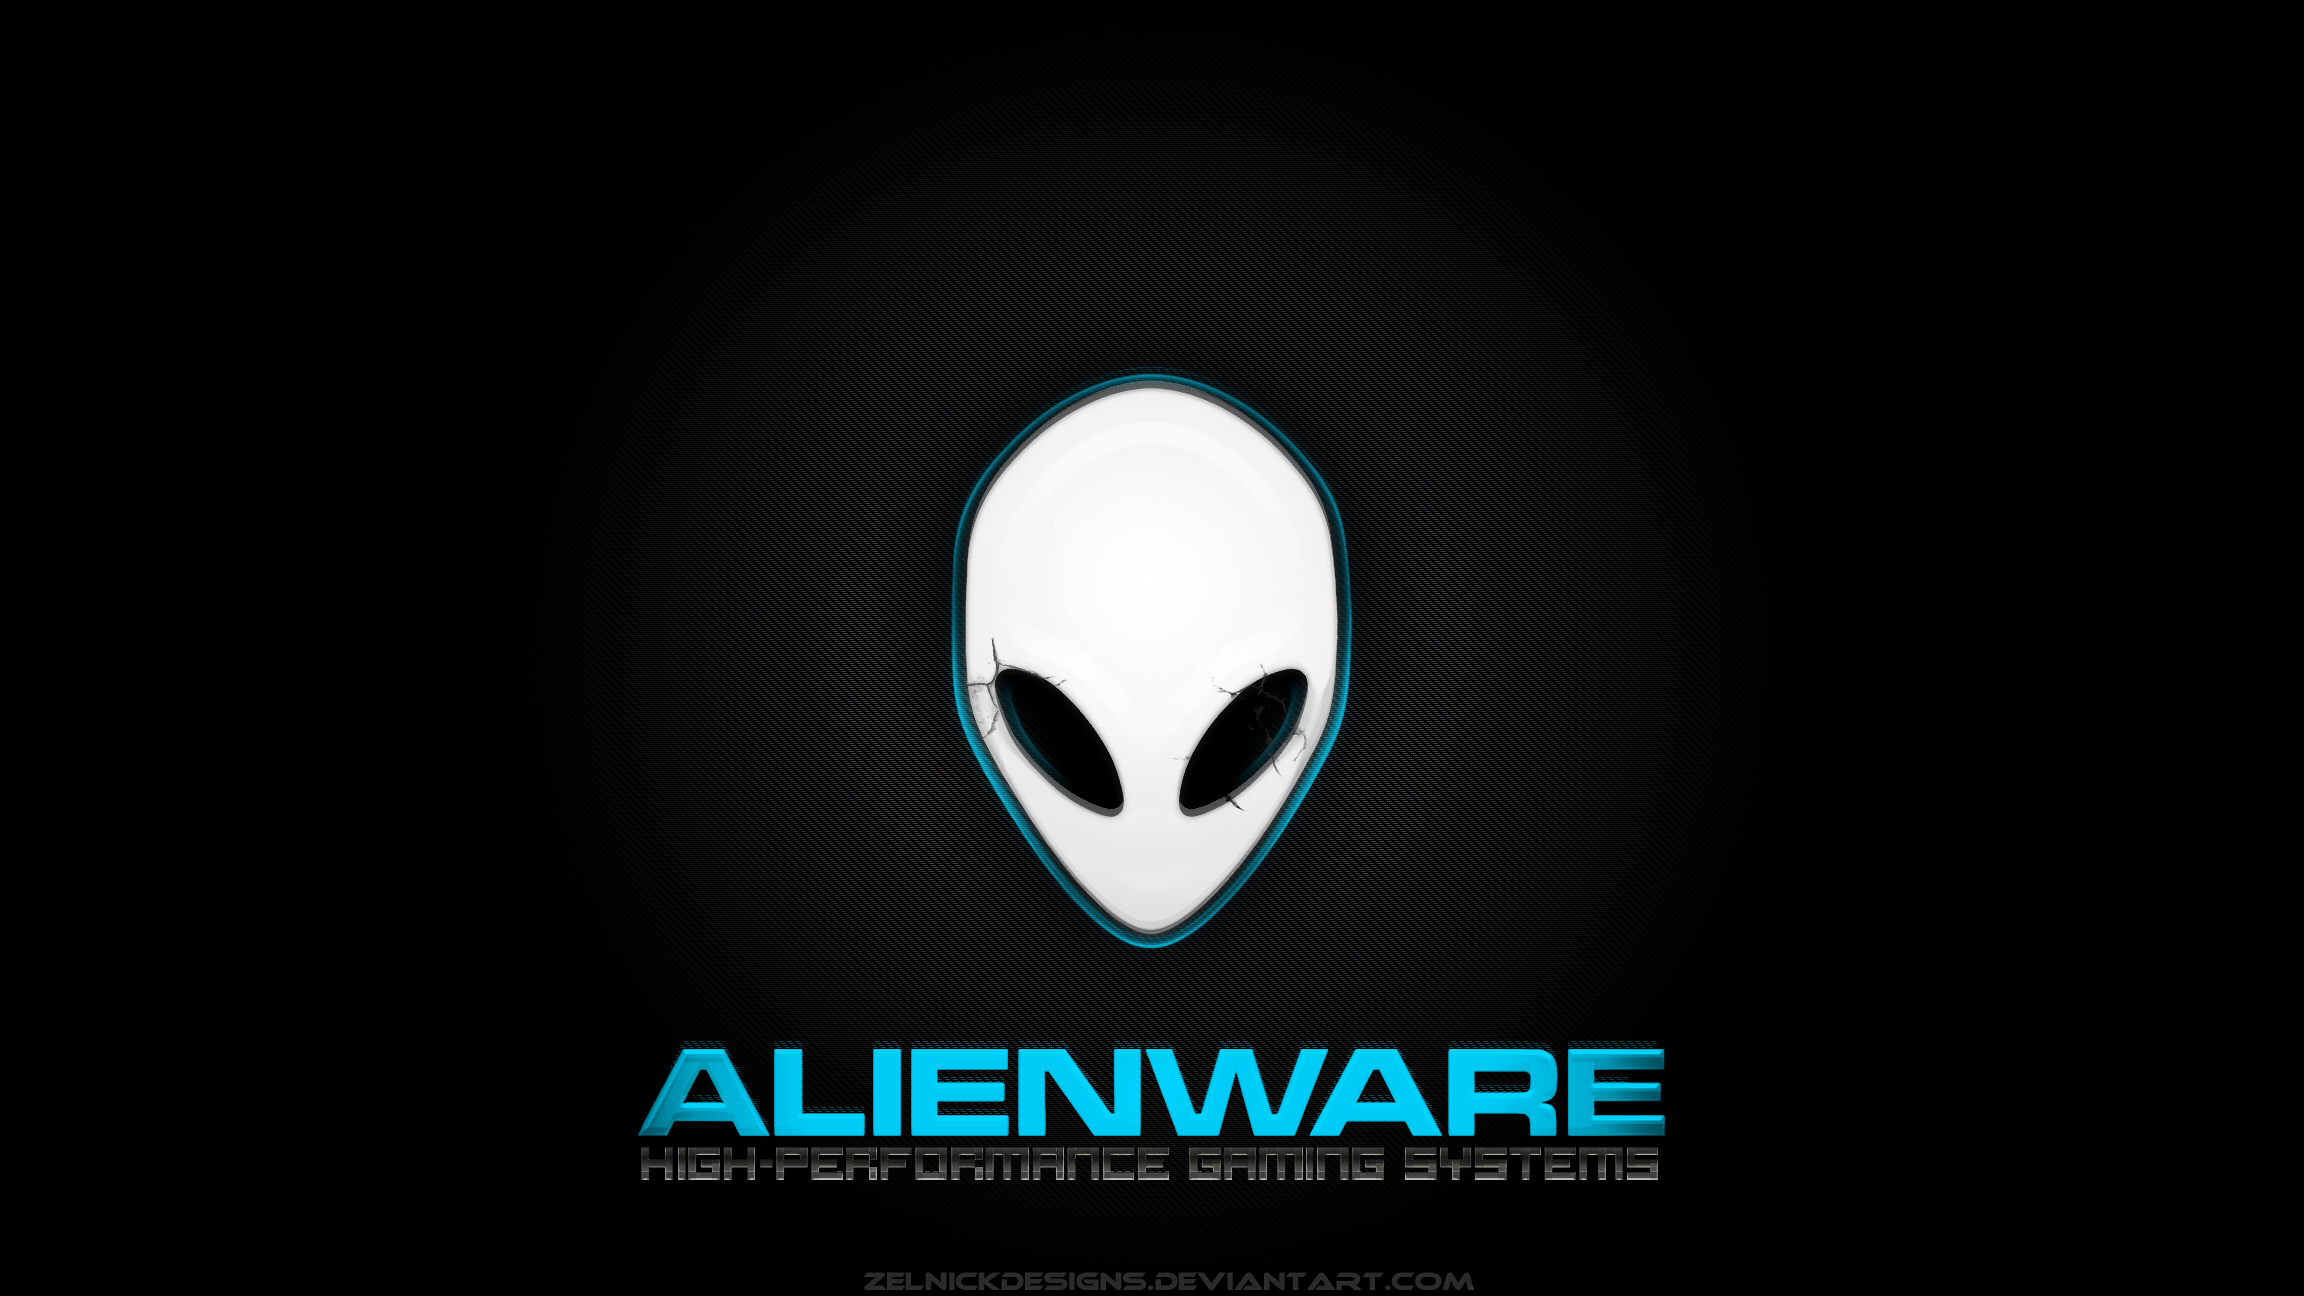 Top Alienware Wallpaper Blue Image For